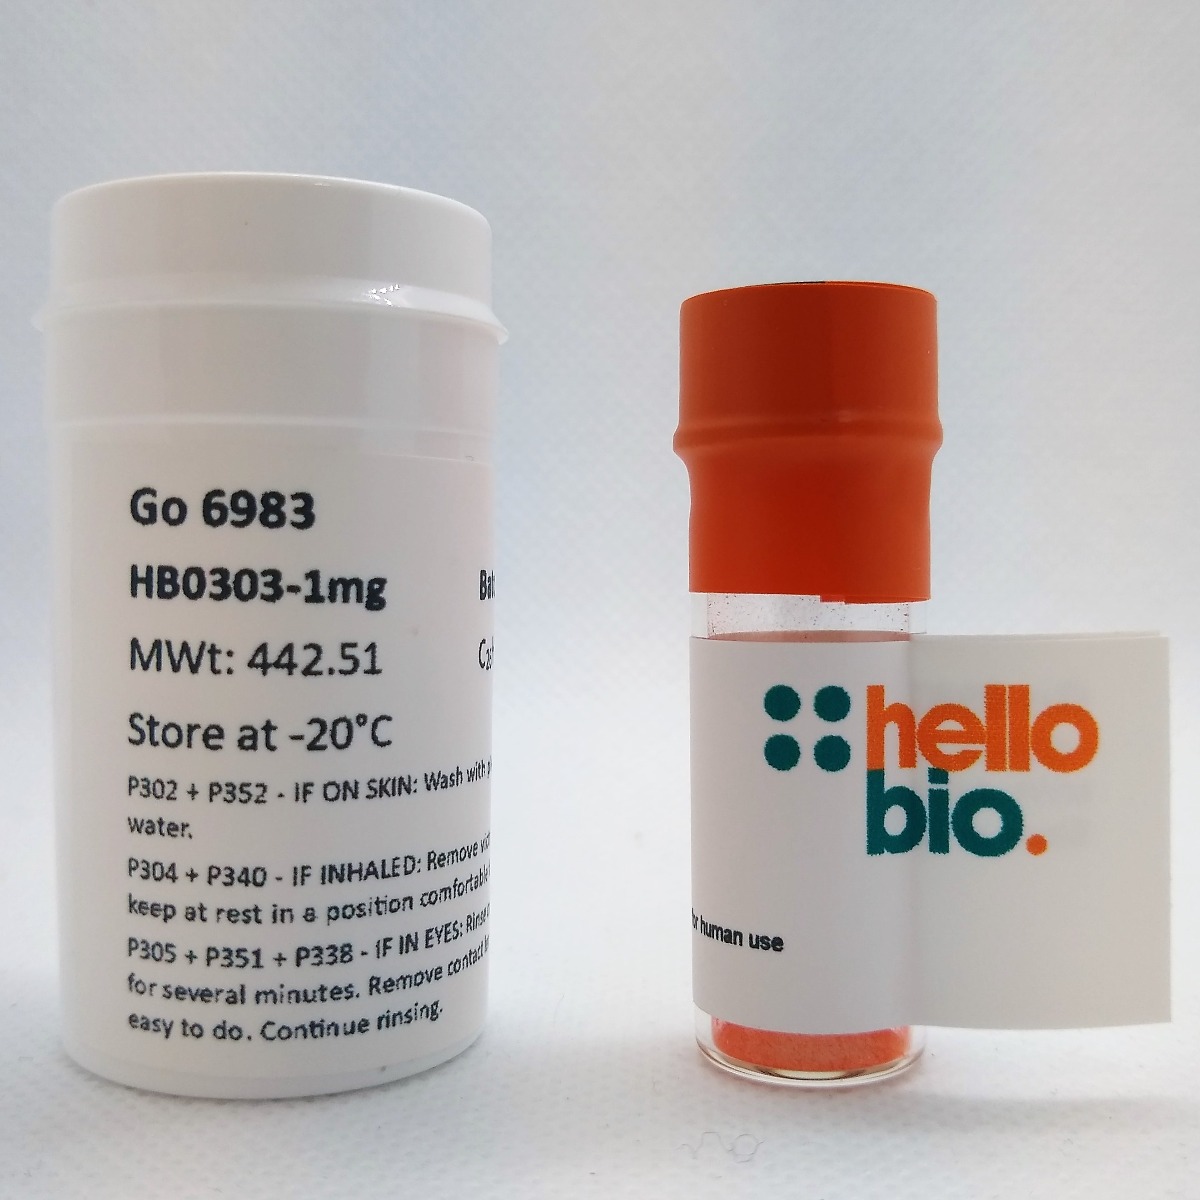 Go 6983 product vial image | Hello Bio